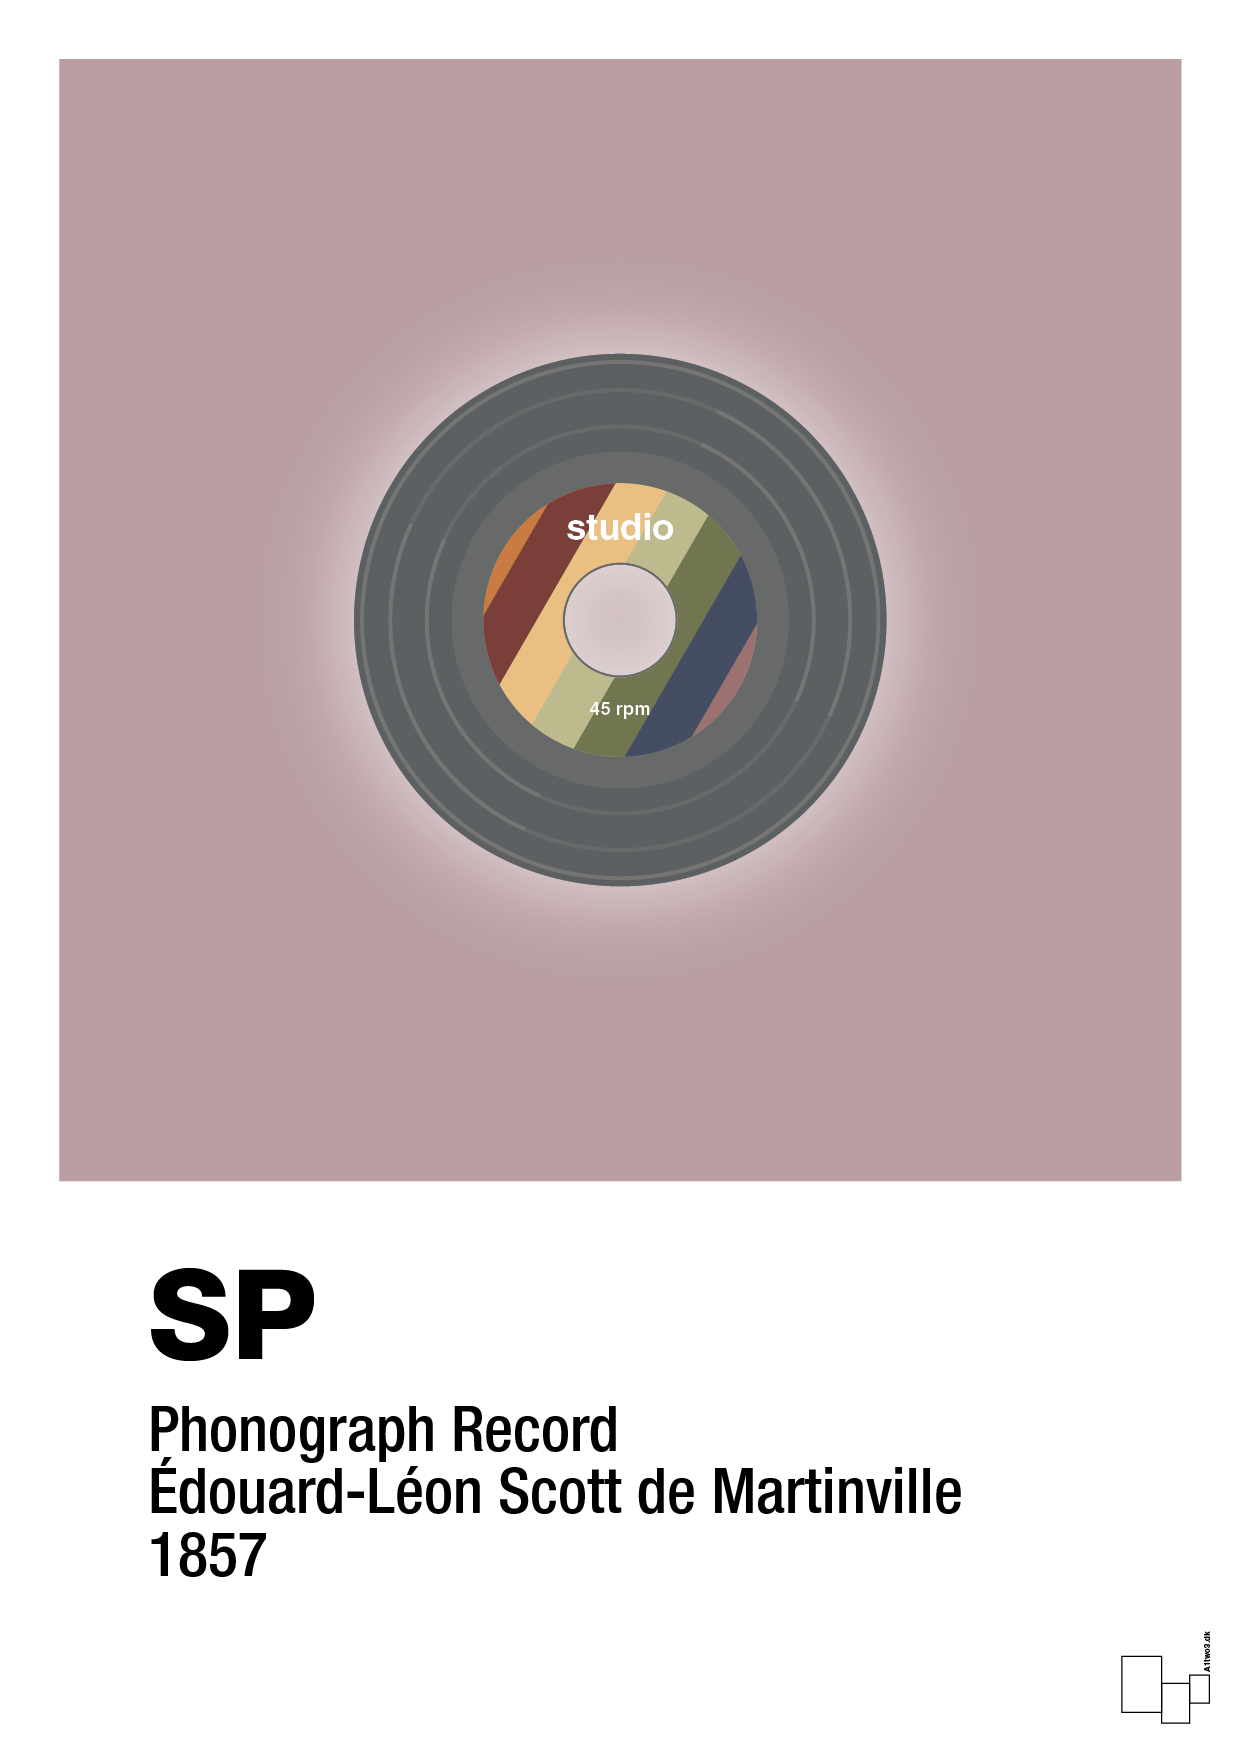 vinylplade 45rpm - Plakat med Grafik i Light Rose